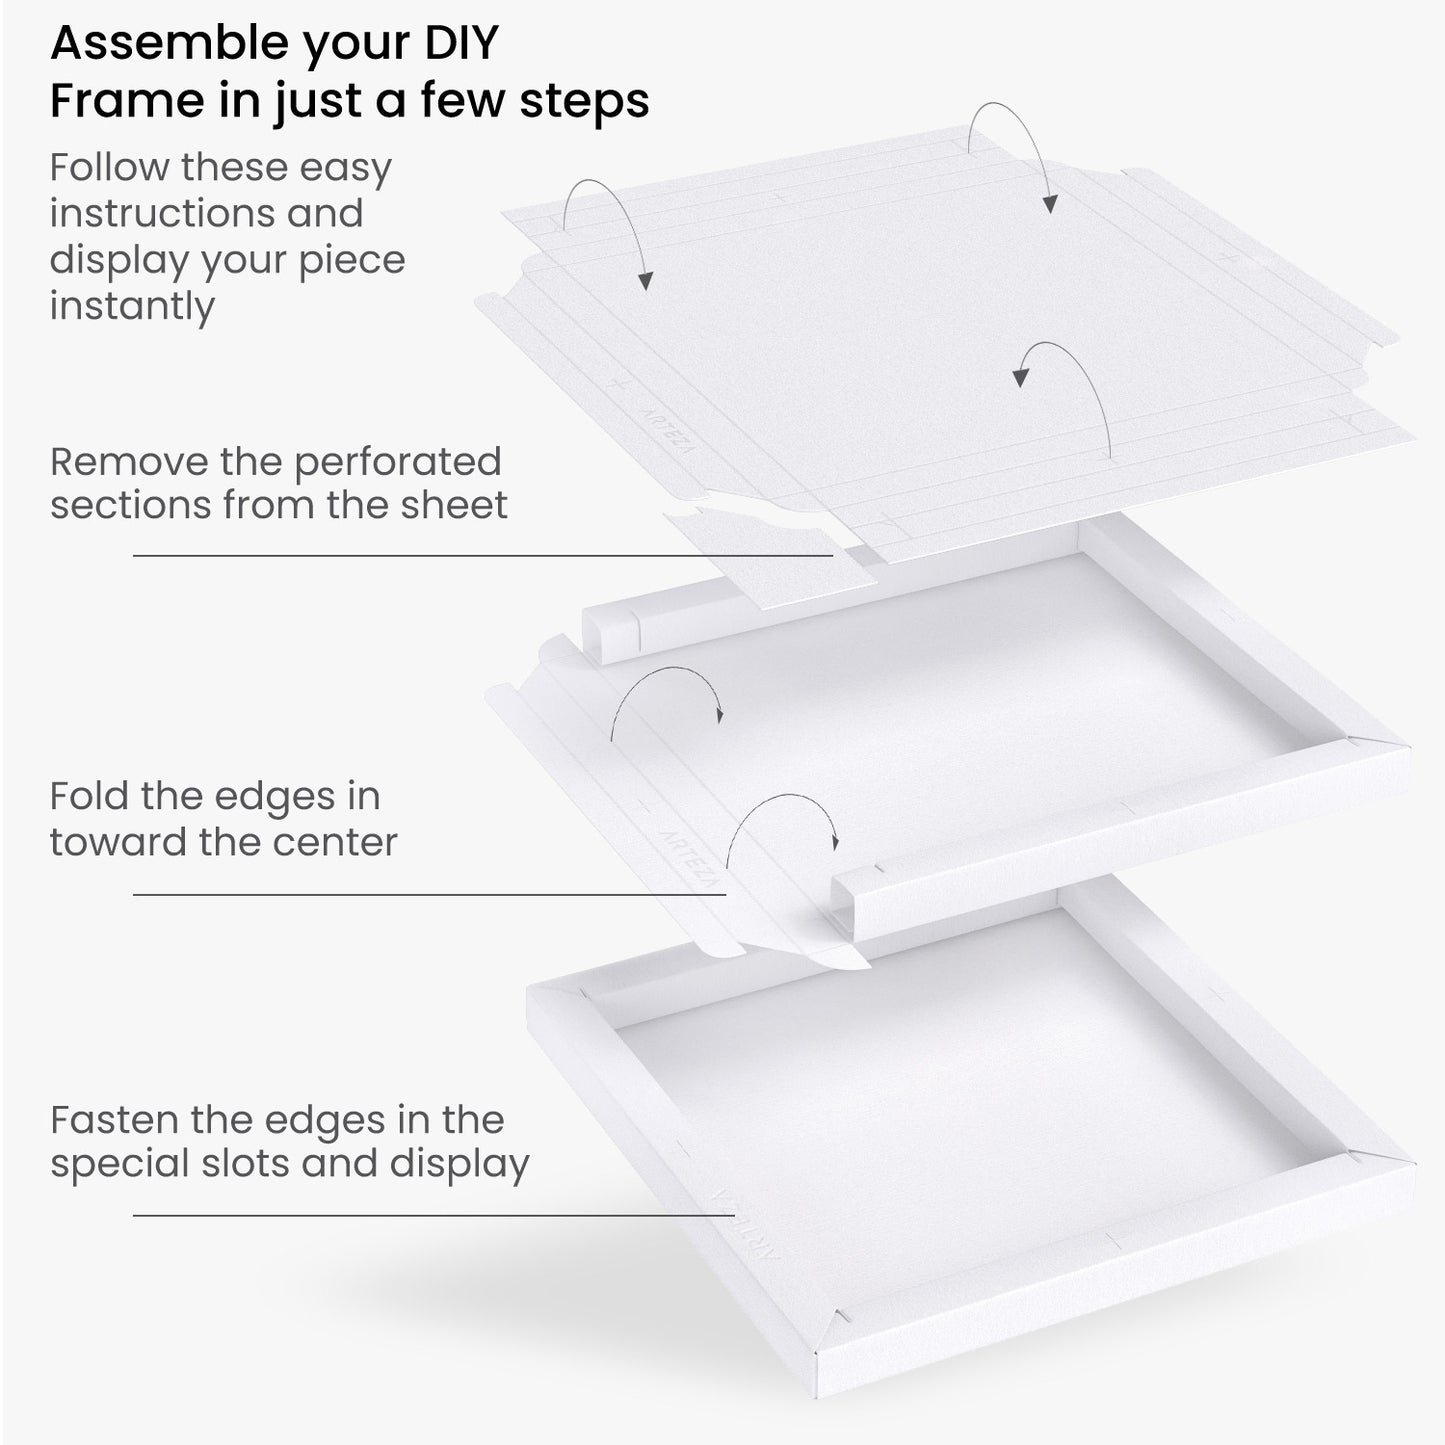 DIY Foldable Canvas Frame, Mixed Media, 9.5" x 9.5" - 20 Sheets